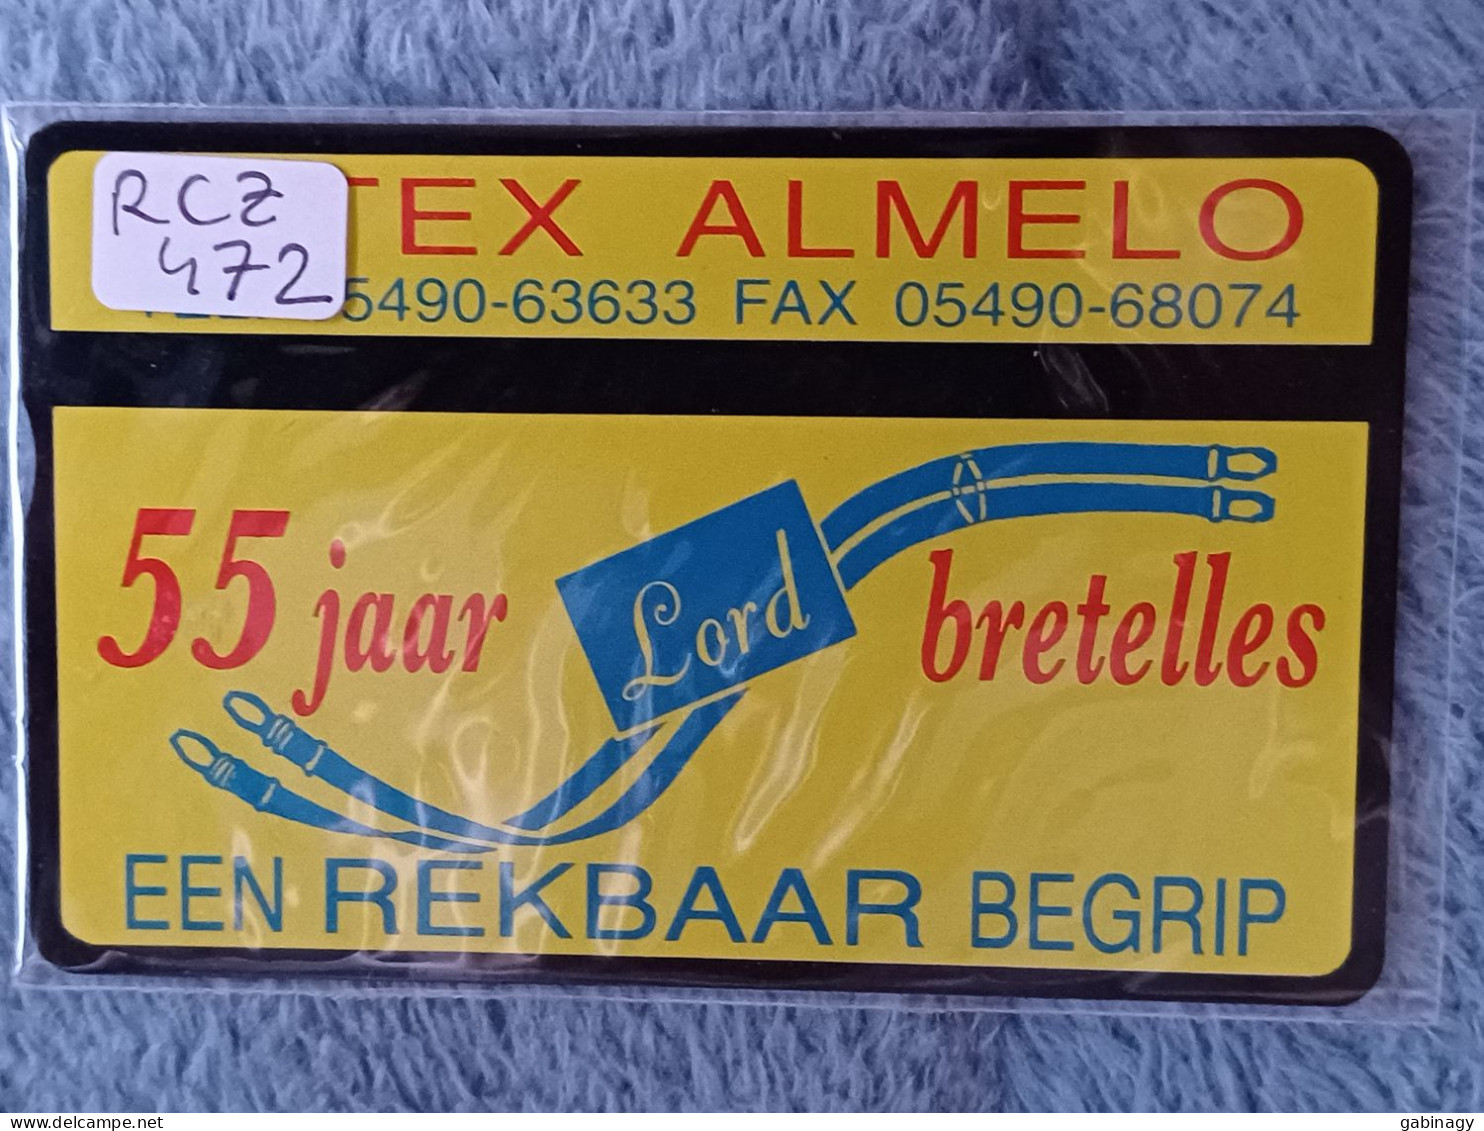 NETHERLANDS - RCZ472 - Eltex Almelo 55 Jaar Lord Bretelles - 1.030EX. - Privadas